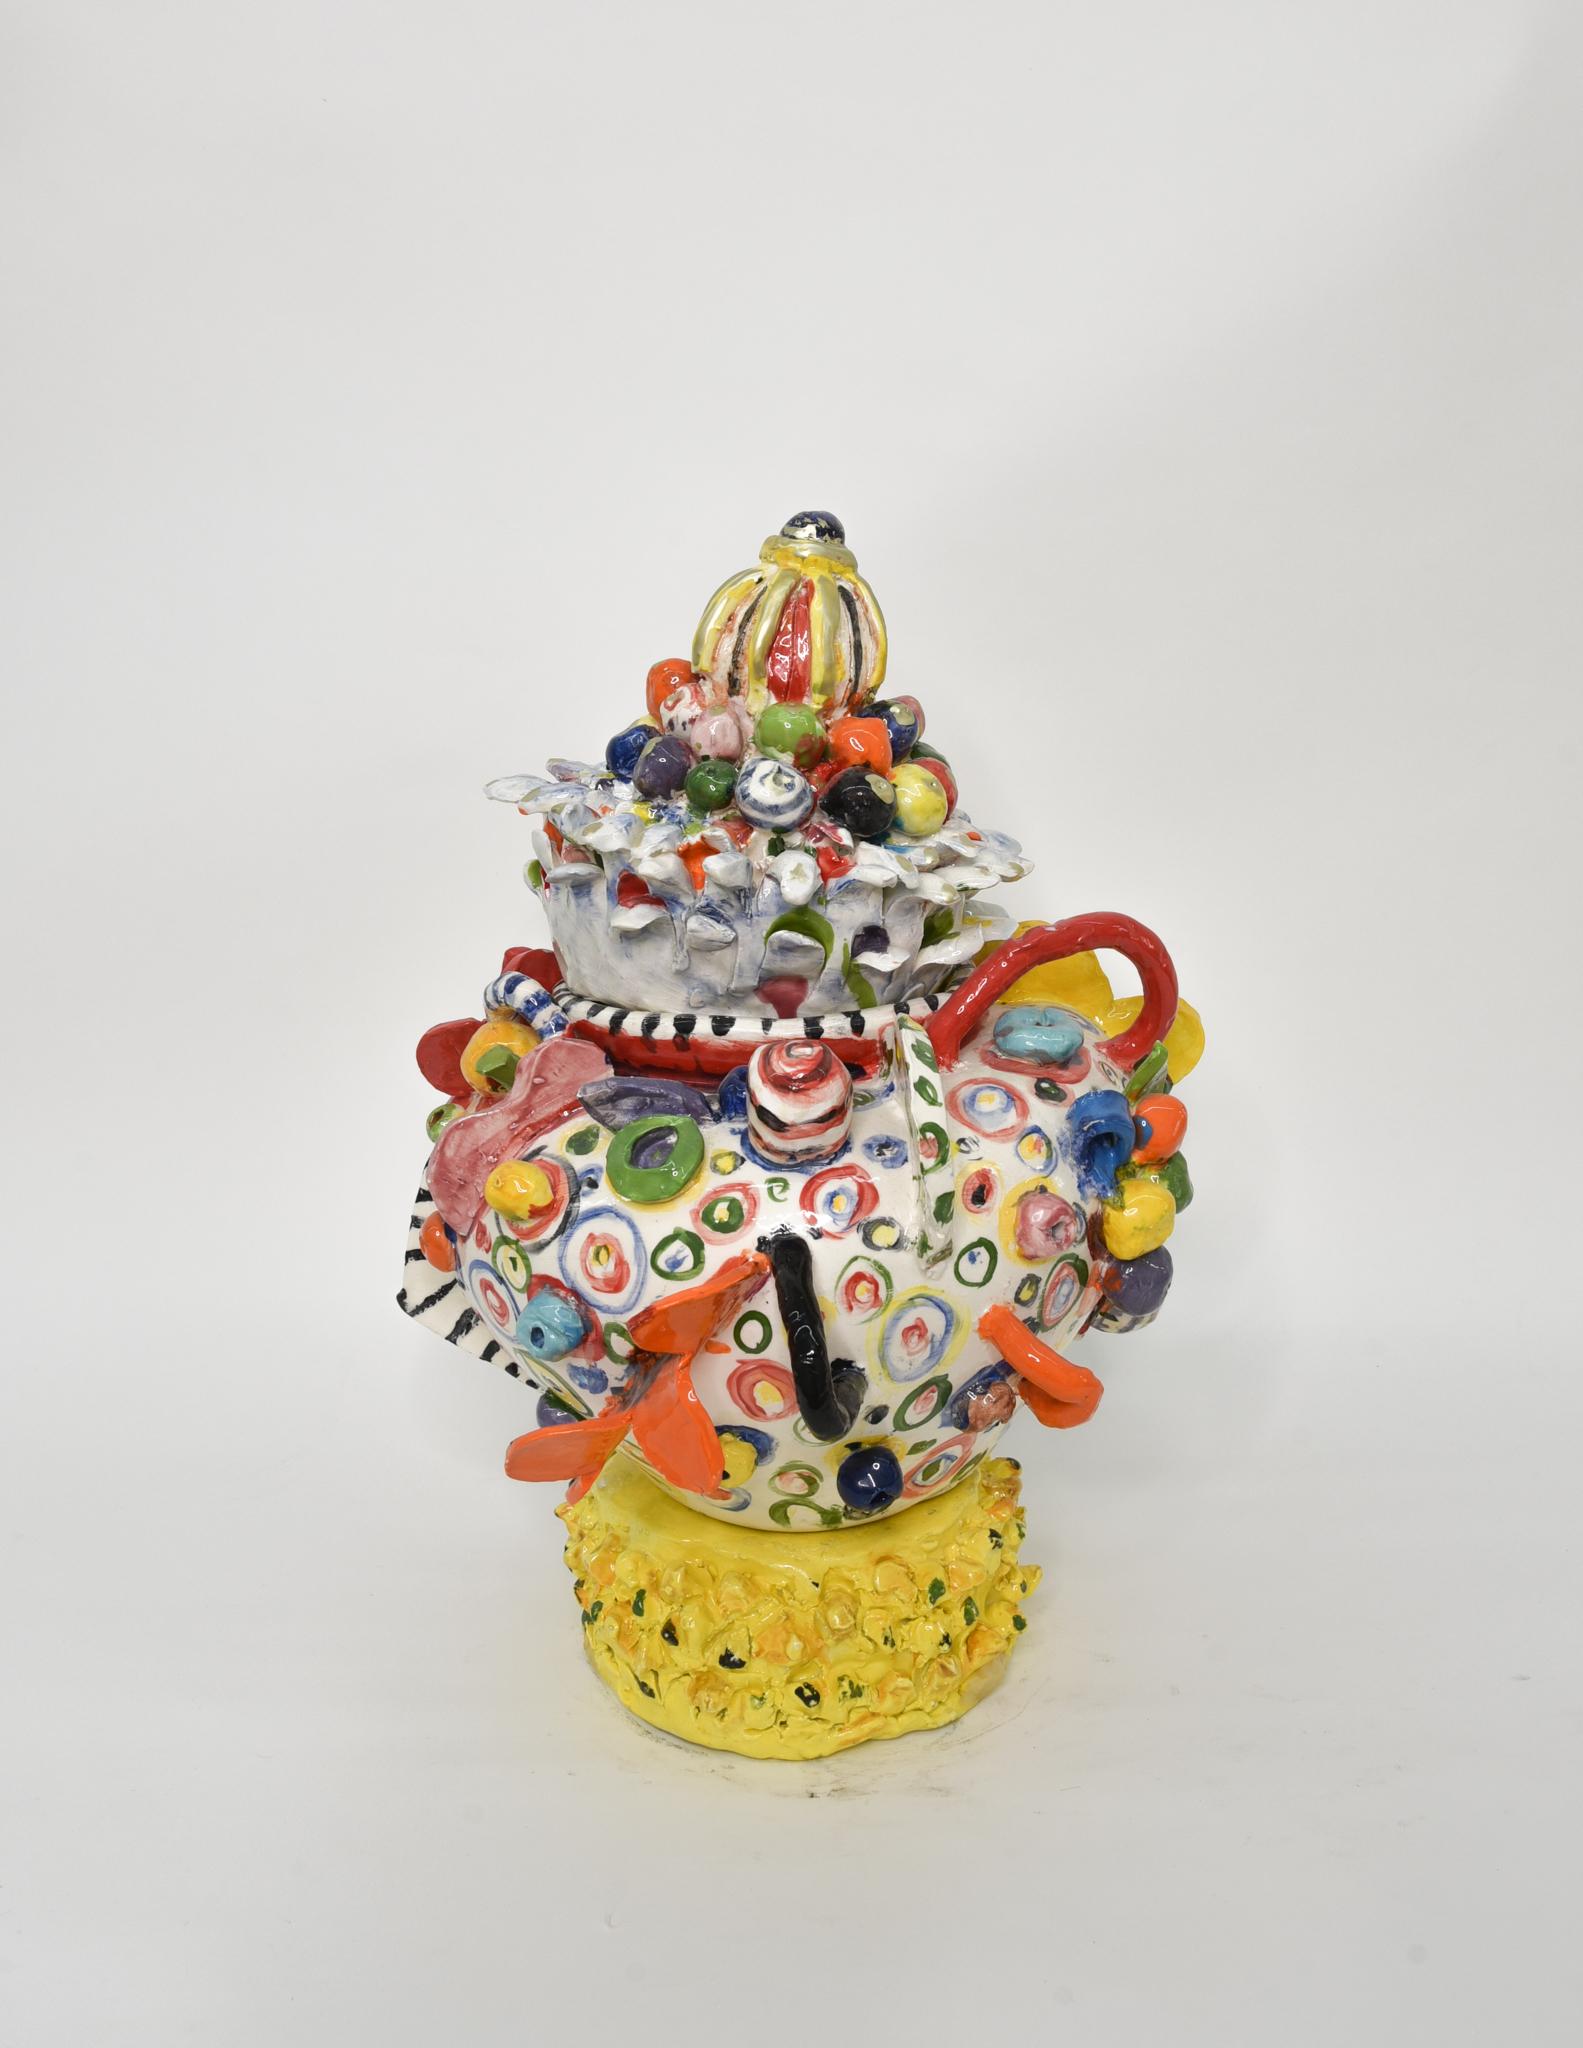 Charo Oquet Still-Life Sculpture - Untitled XV. Glazed ceramic abstract jar sculpture